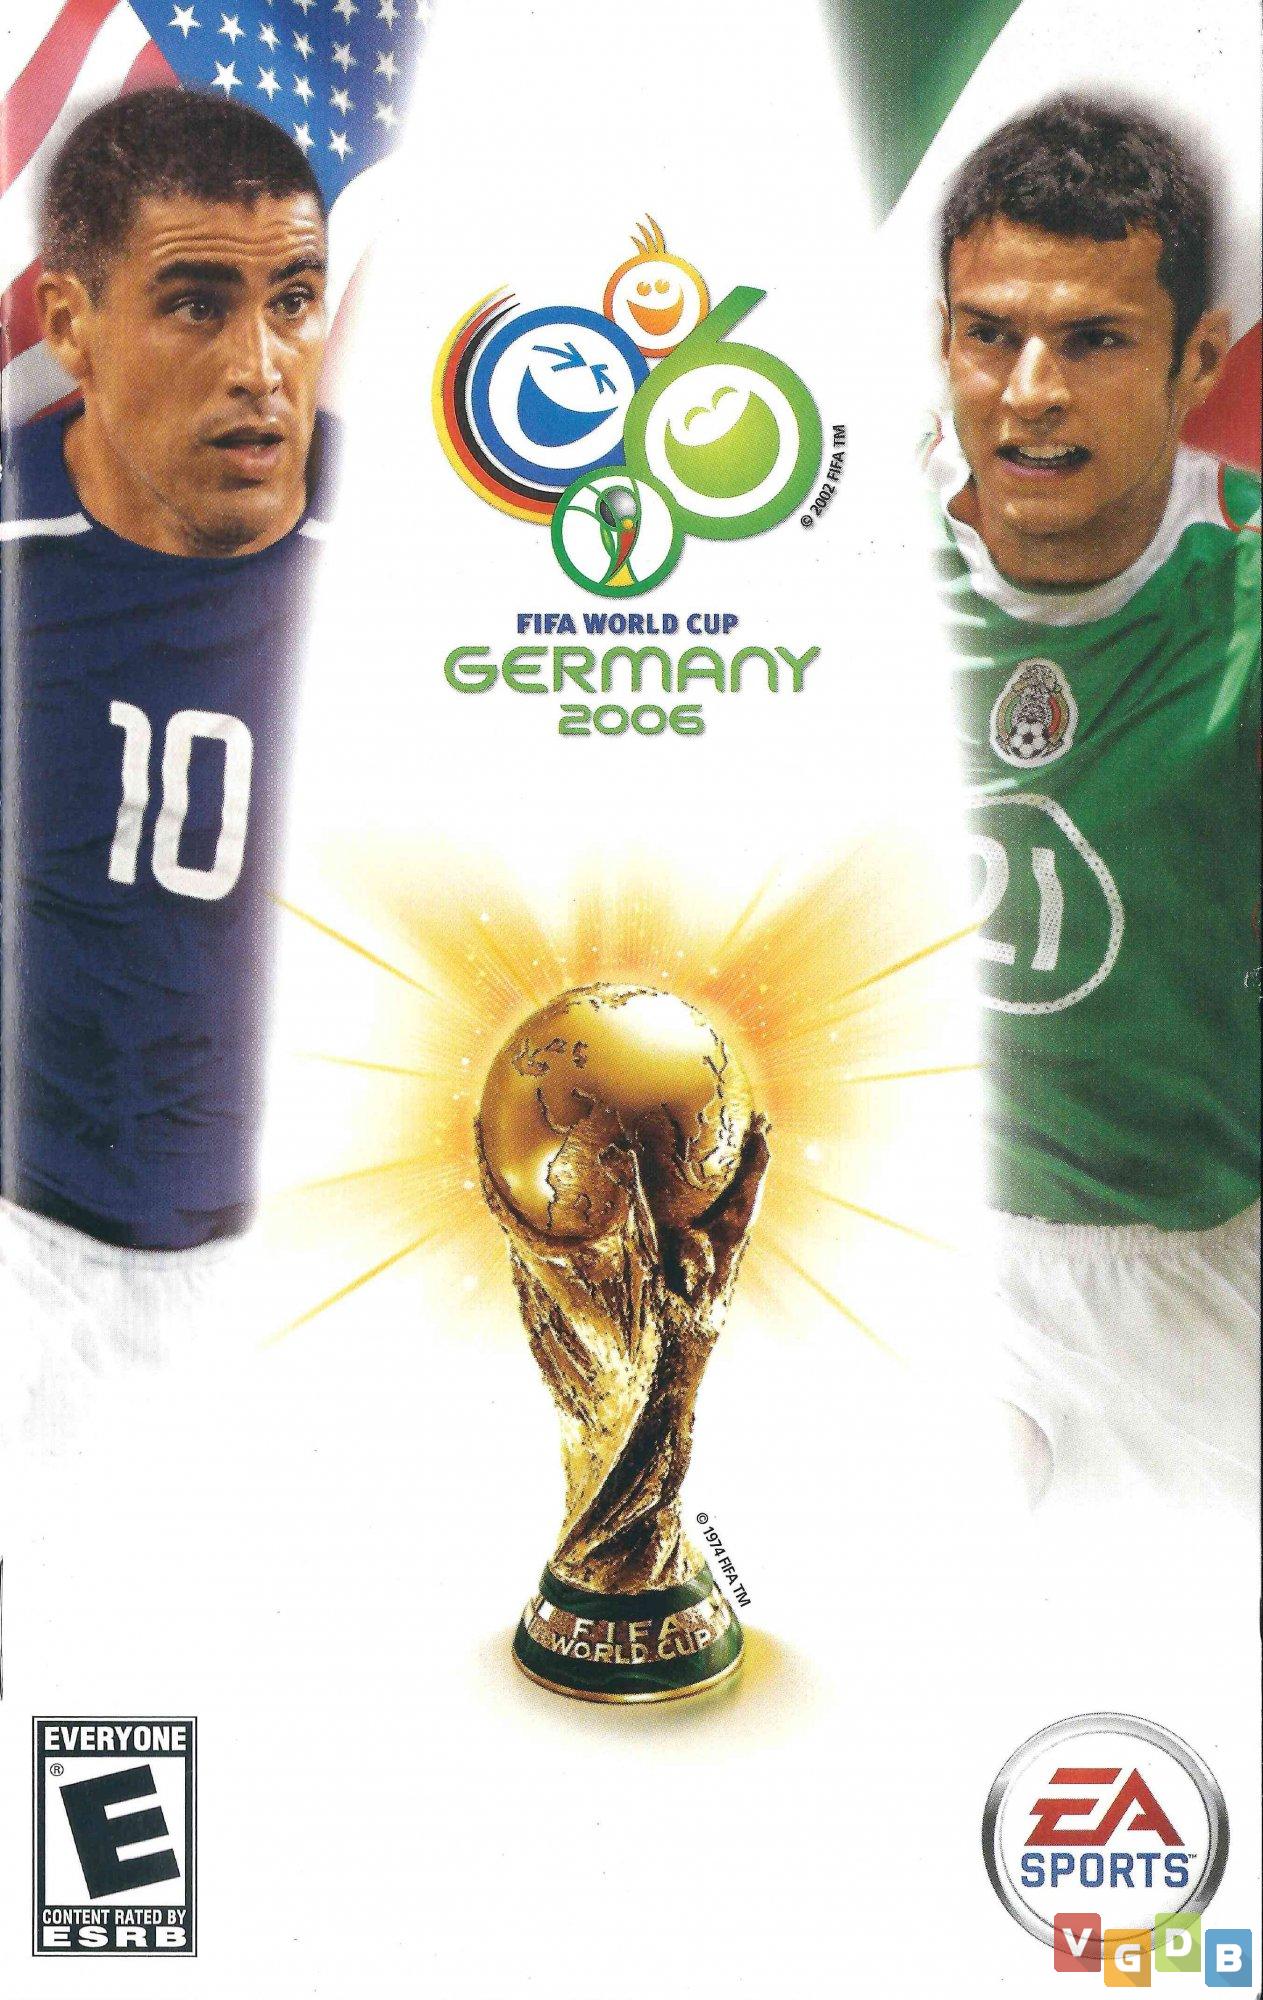 Fifa World Cup Germany 2006 Vgdb Vídeo Game Data Base